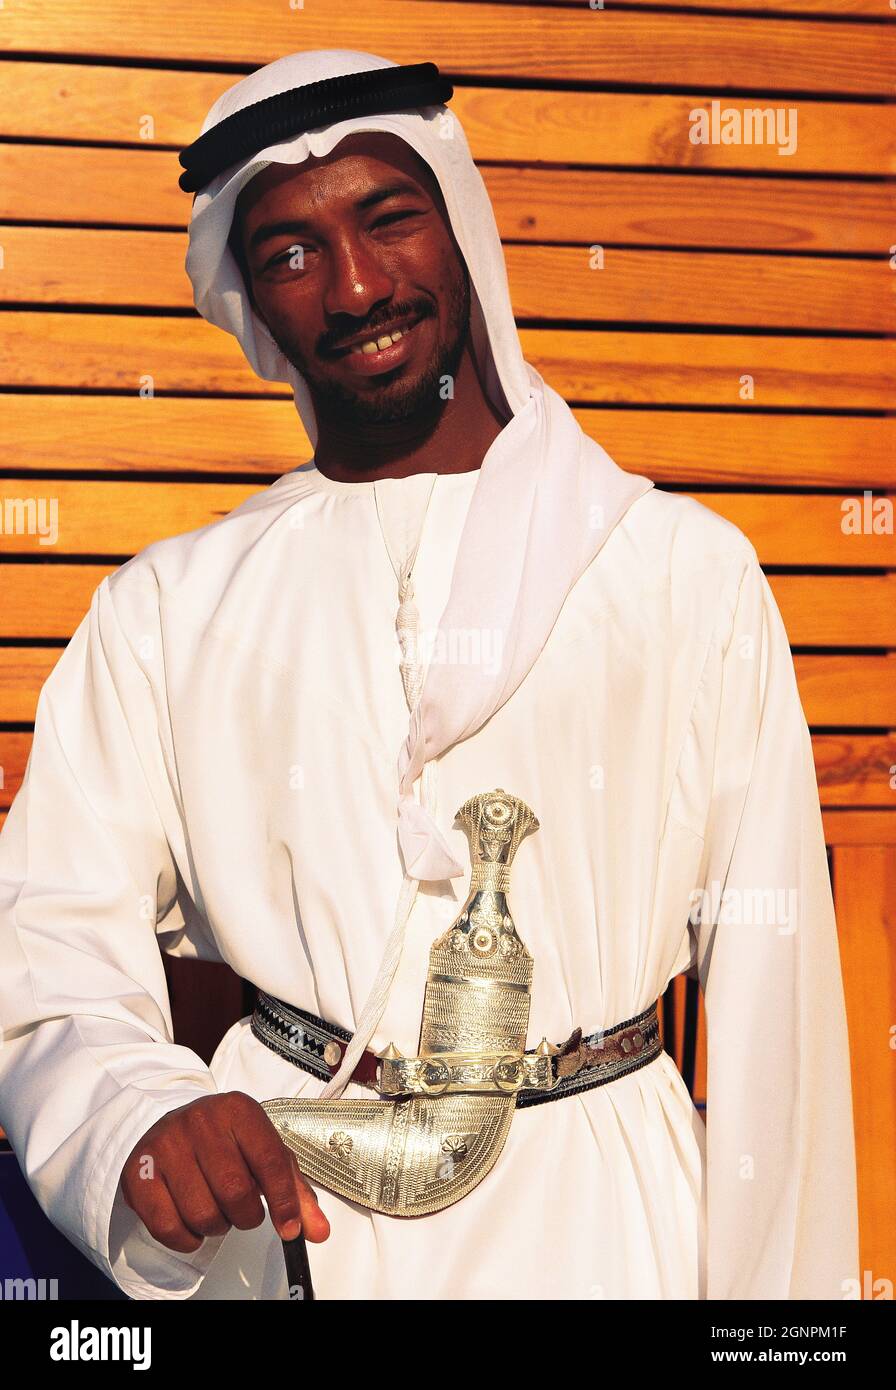 United Arab Emirates. Arab man in traditional dress. Stock Photo